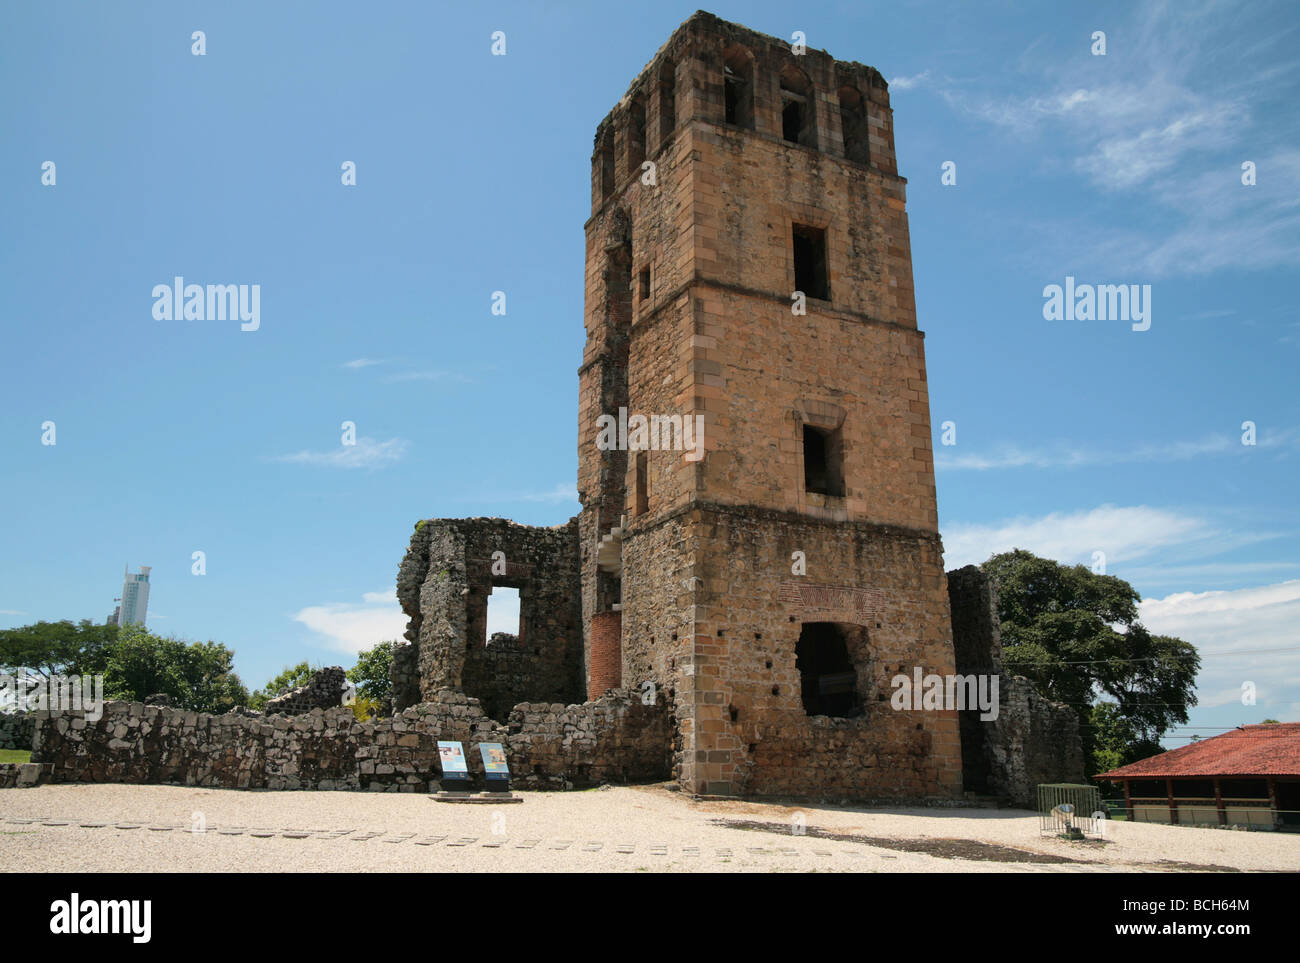 Ruins of Panama La Vieja (Old Panama), at Panama City, showing the tower and surroundings. Stock Photo